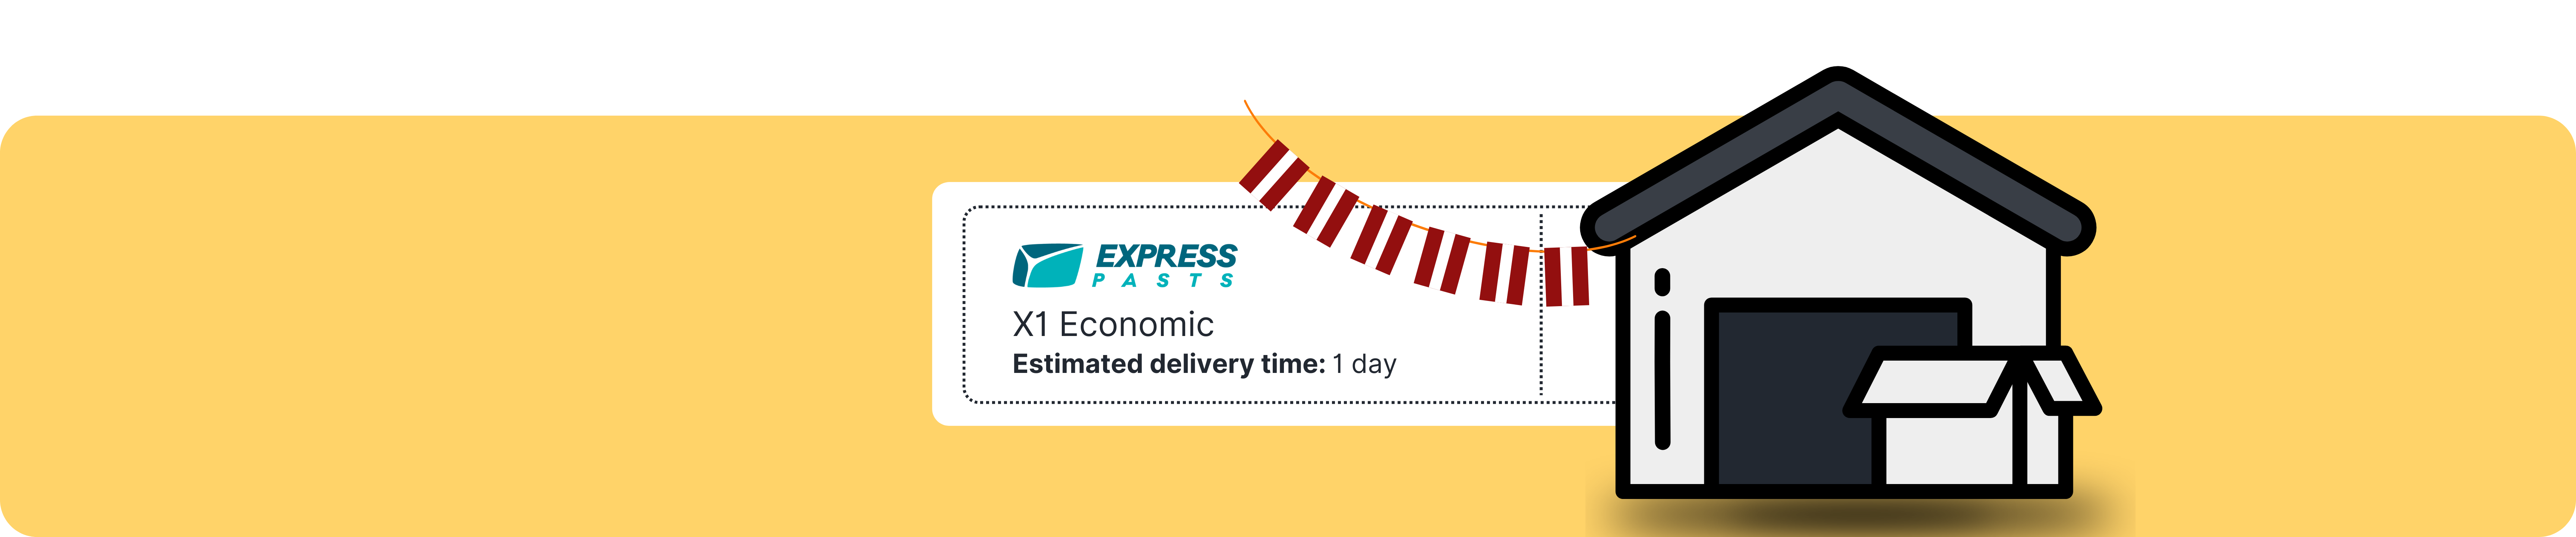 X1 Economic Express pasts